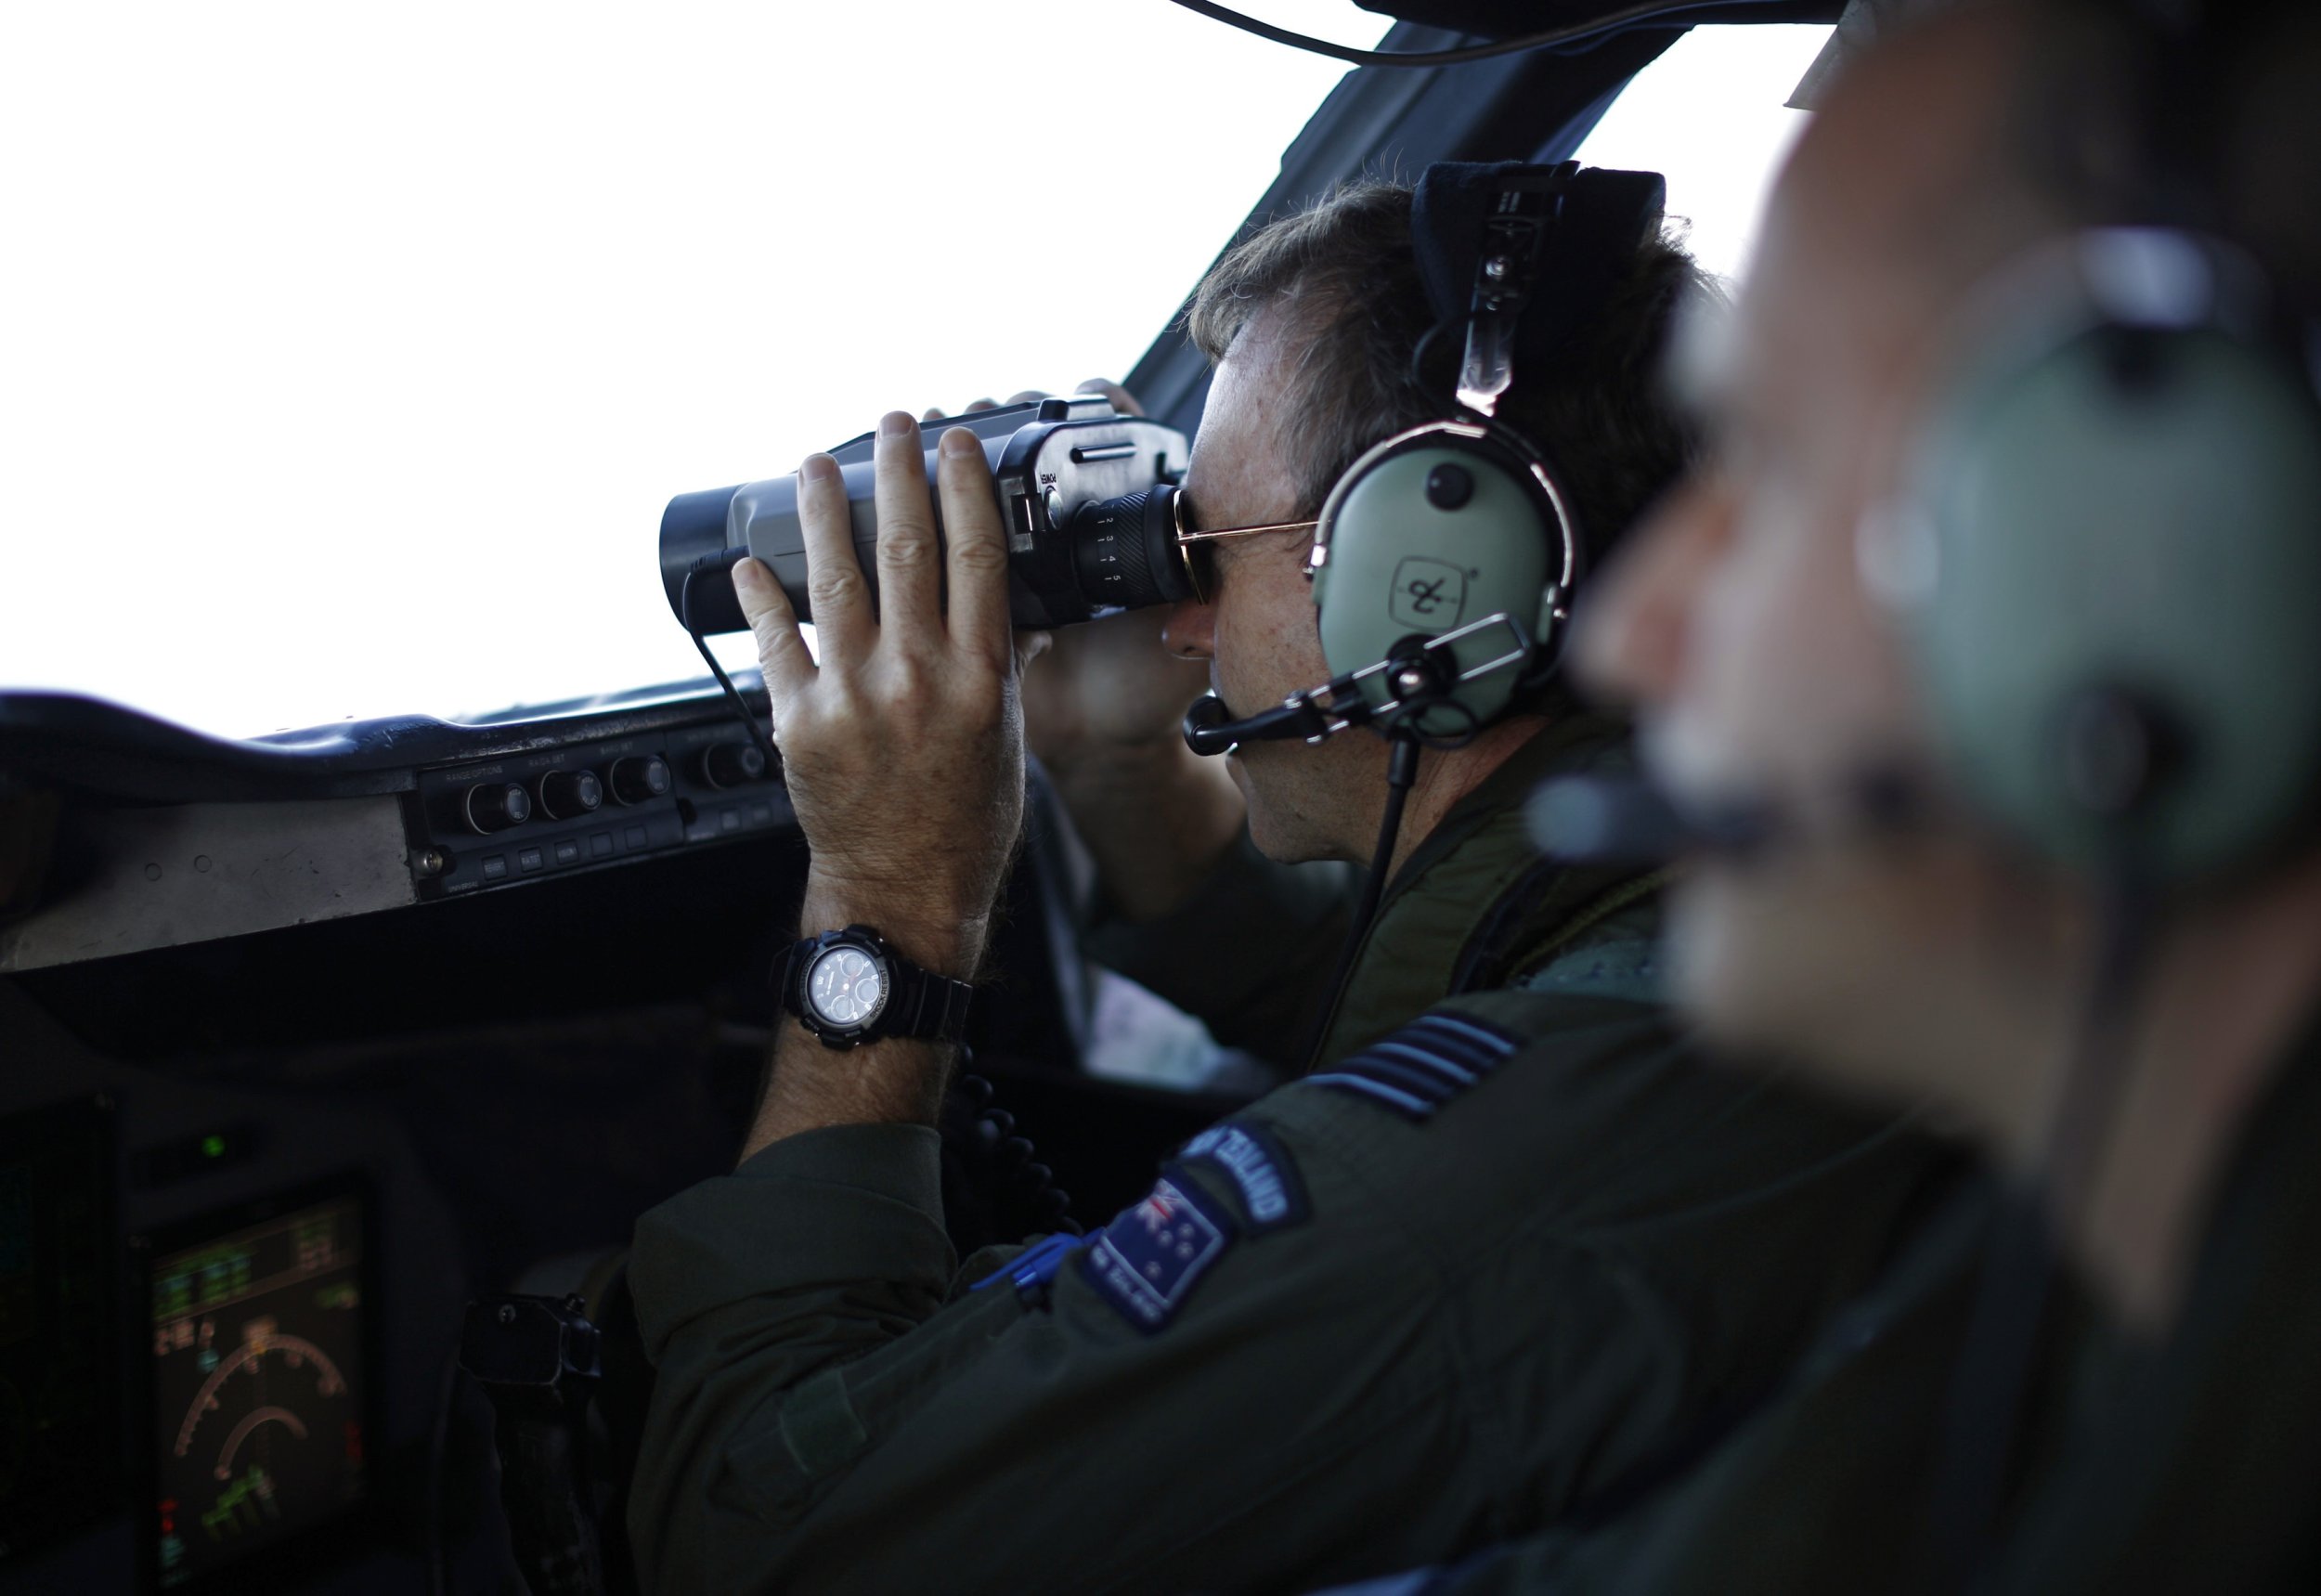 MH370 search binoculars March 29